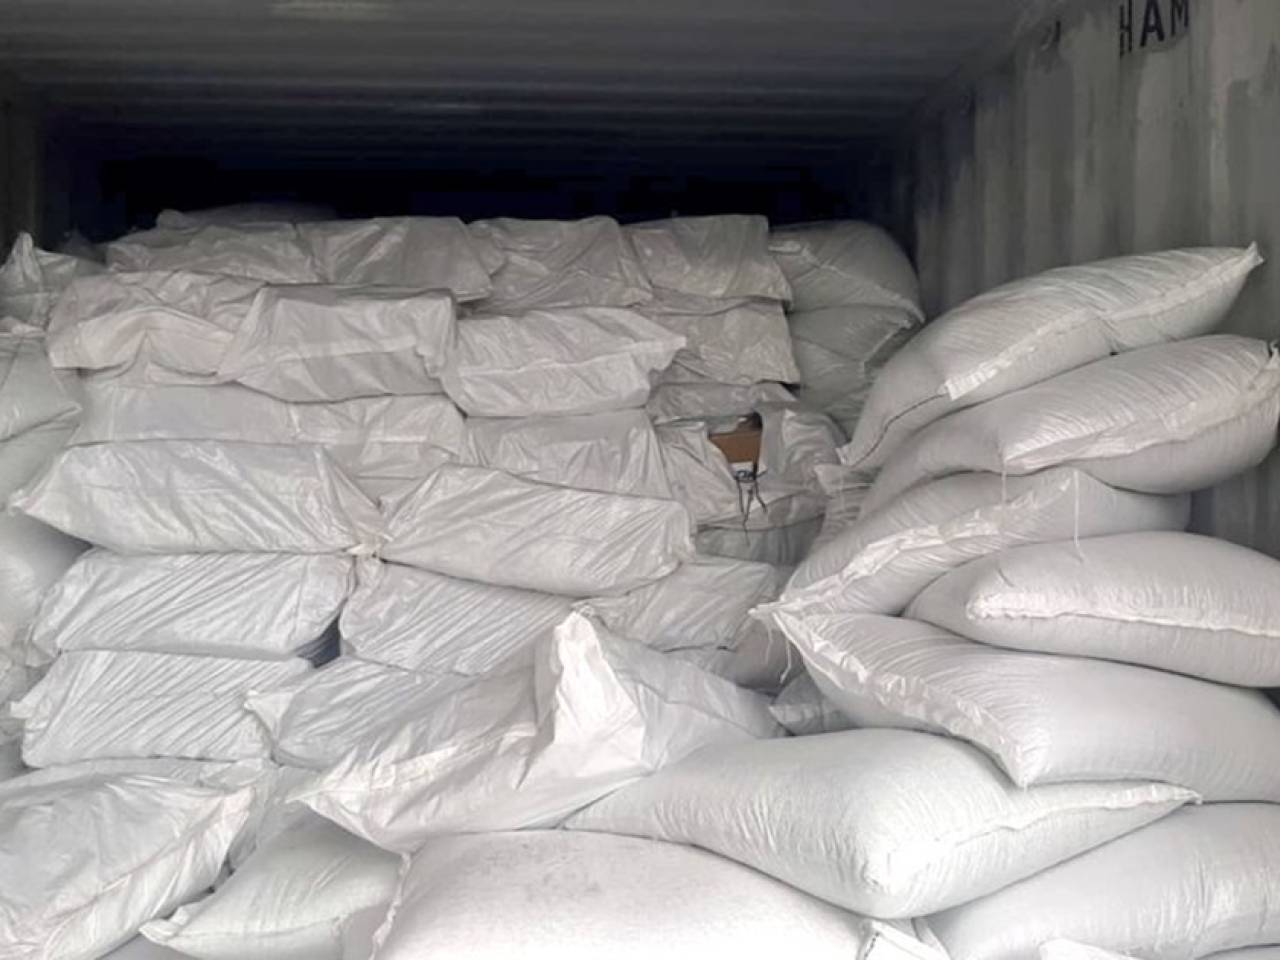 6 toneladas de cocaína fueron incautadas cuando iban a ser enviadas a México